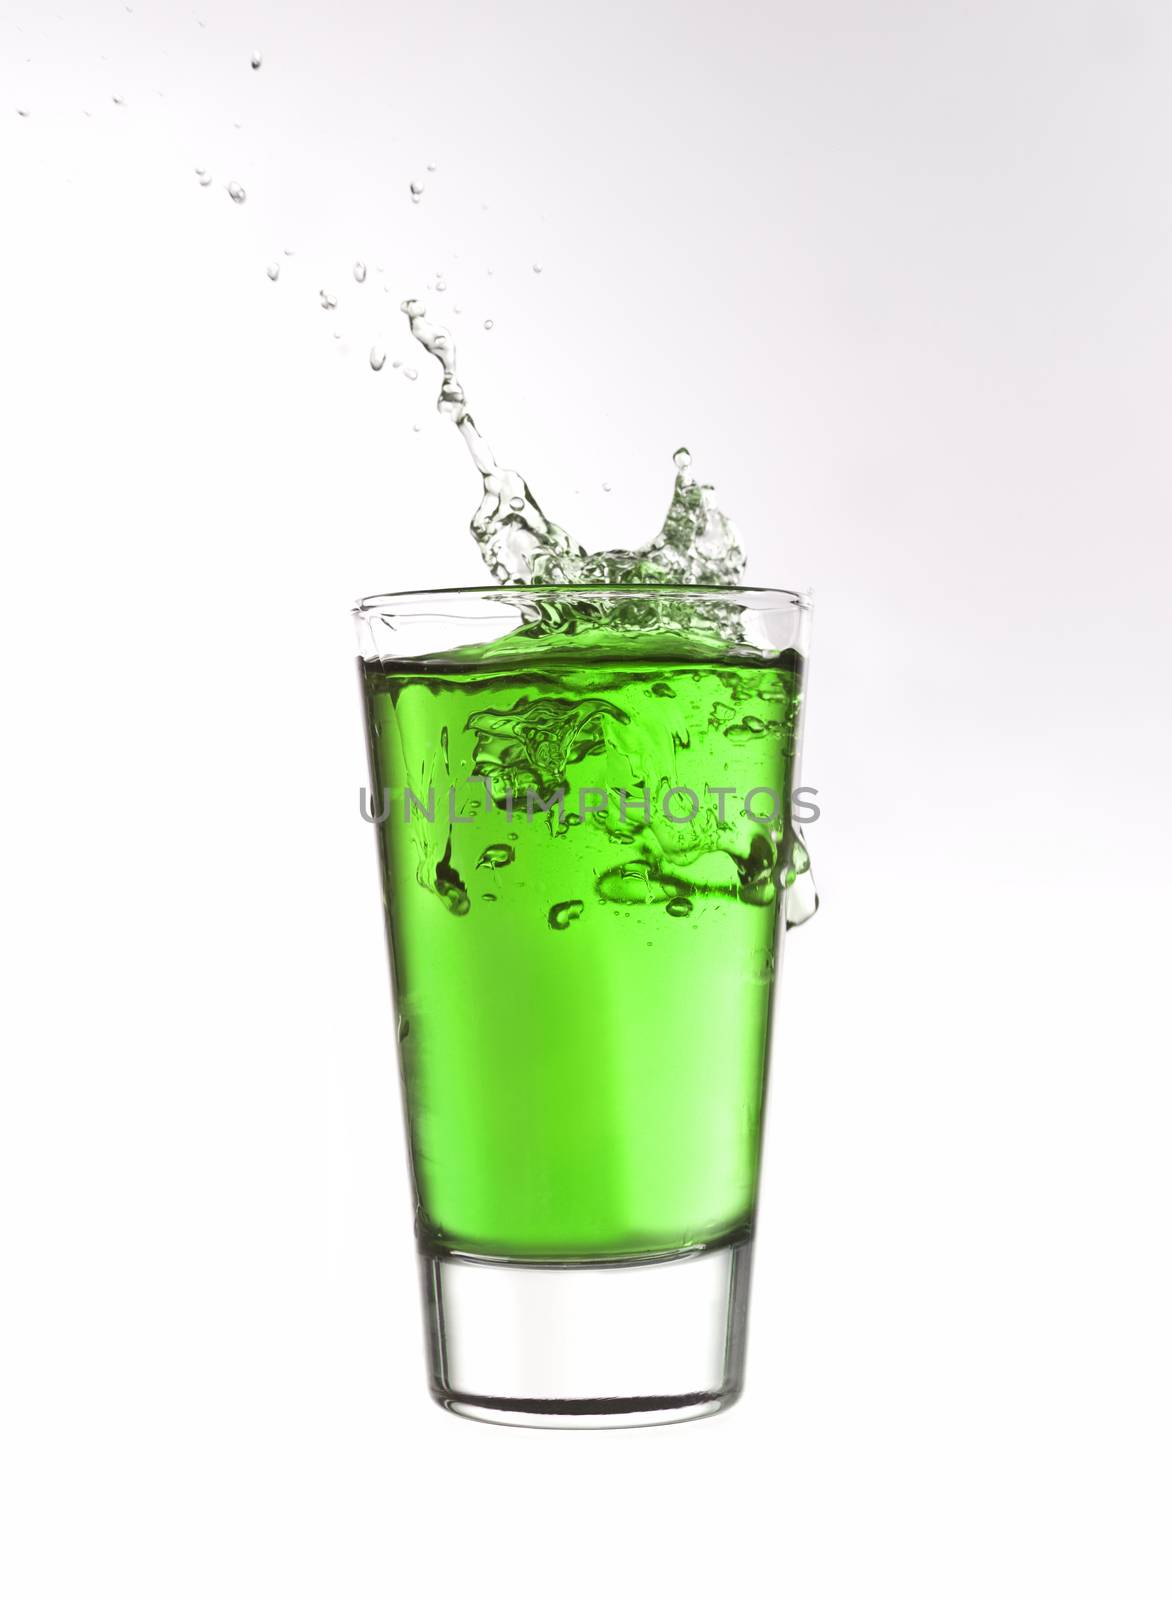 Splash in a glass of green lemonade isolated on white background